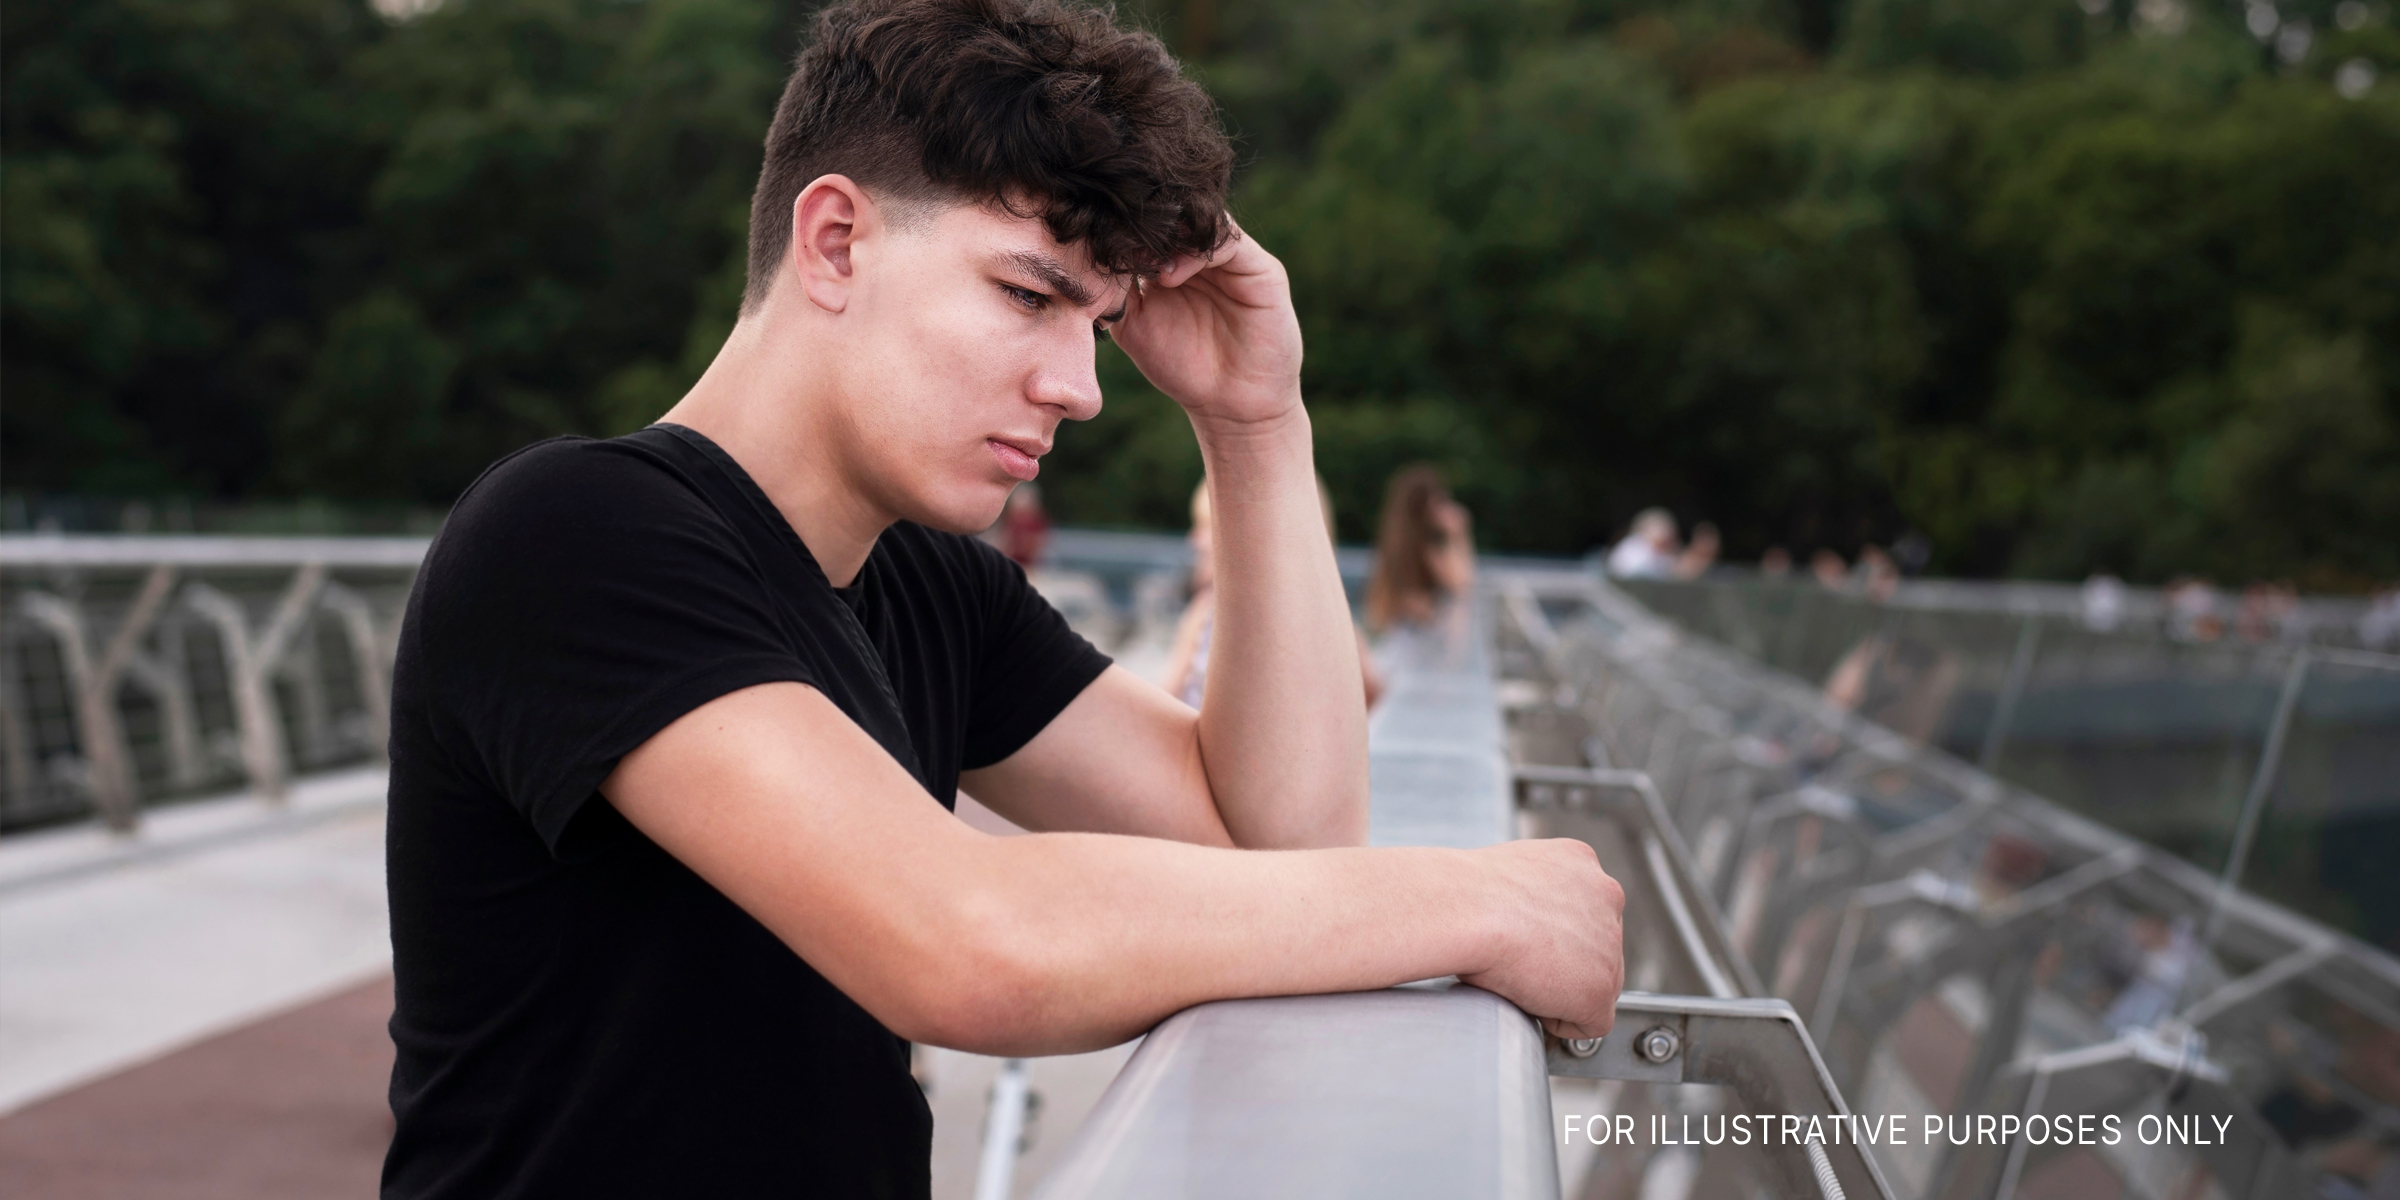 A sad teenage boy | Source: Shutterstock